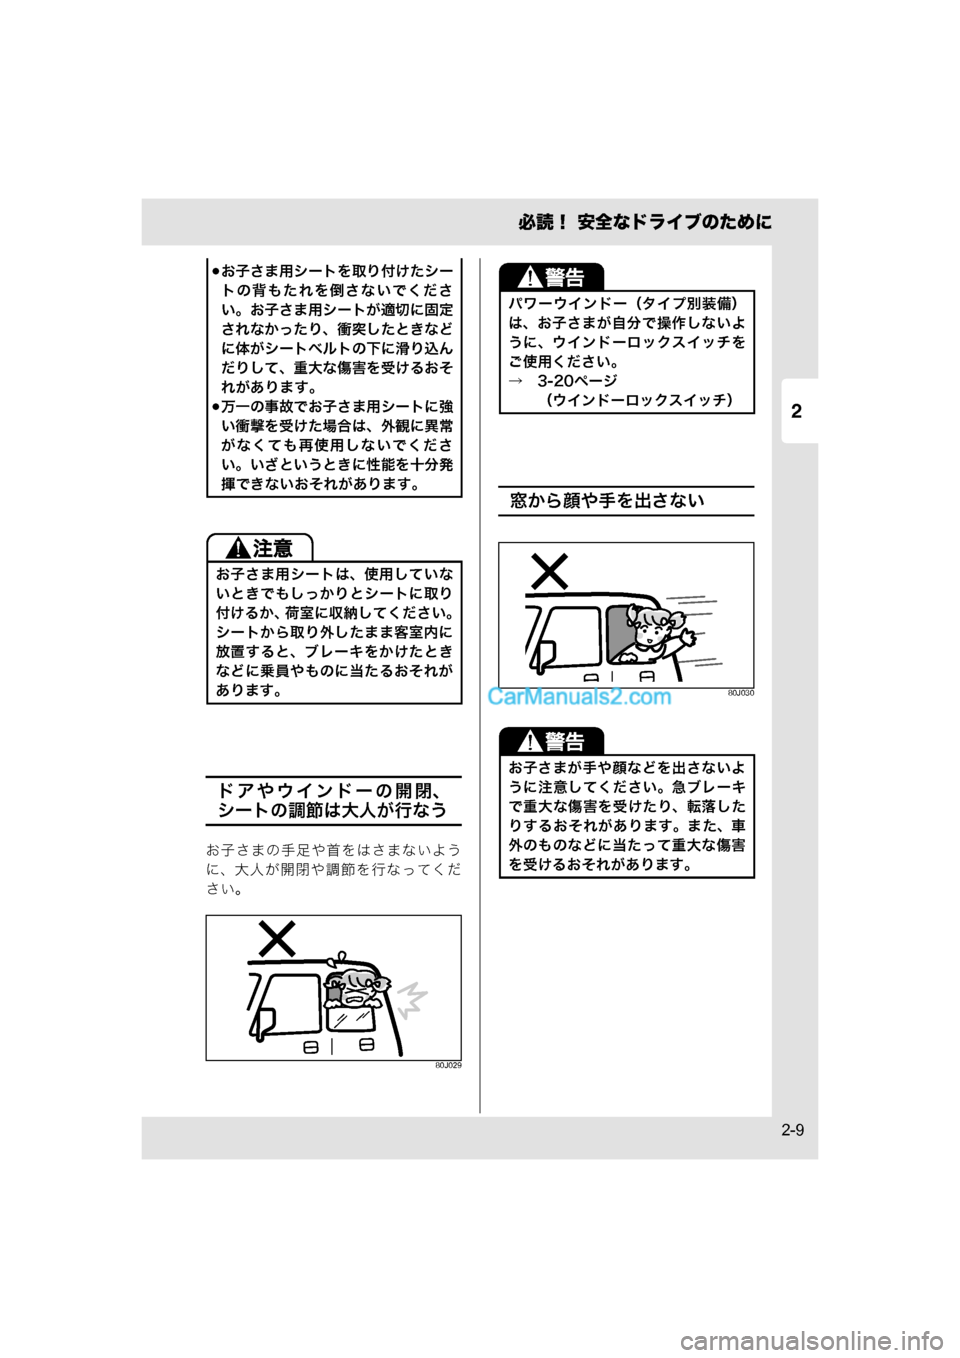 MAZDA MODEL CARROL 2015  取扱説明書 (キャロル) (in Japanese) 2
必読！ 安全なドライブのために
2-9
ドアやウインドーの開閉、
シートの調節は大人が行なう
お子さまの手足や首をはさまないよう
に、大人が開閉